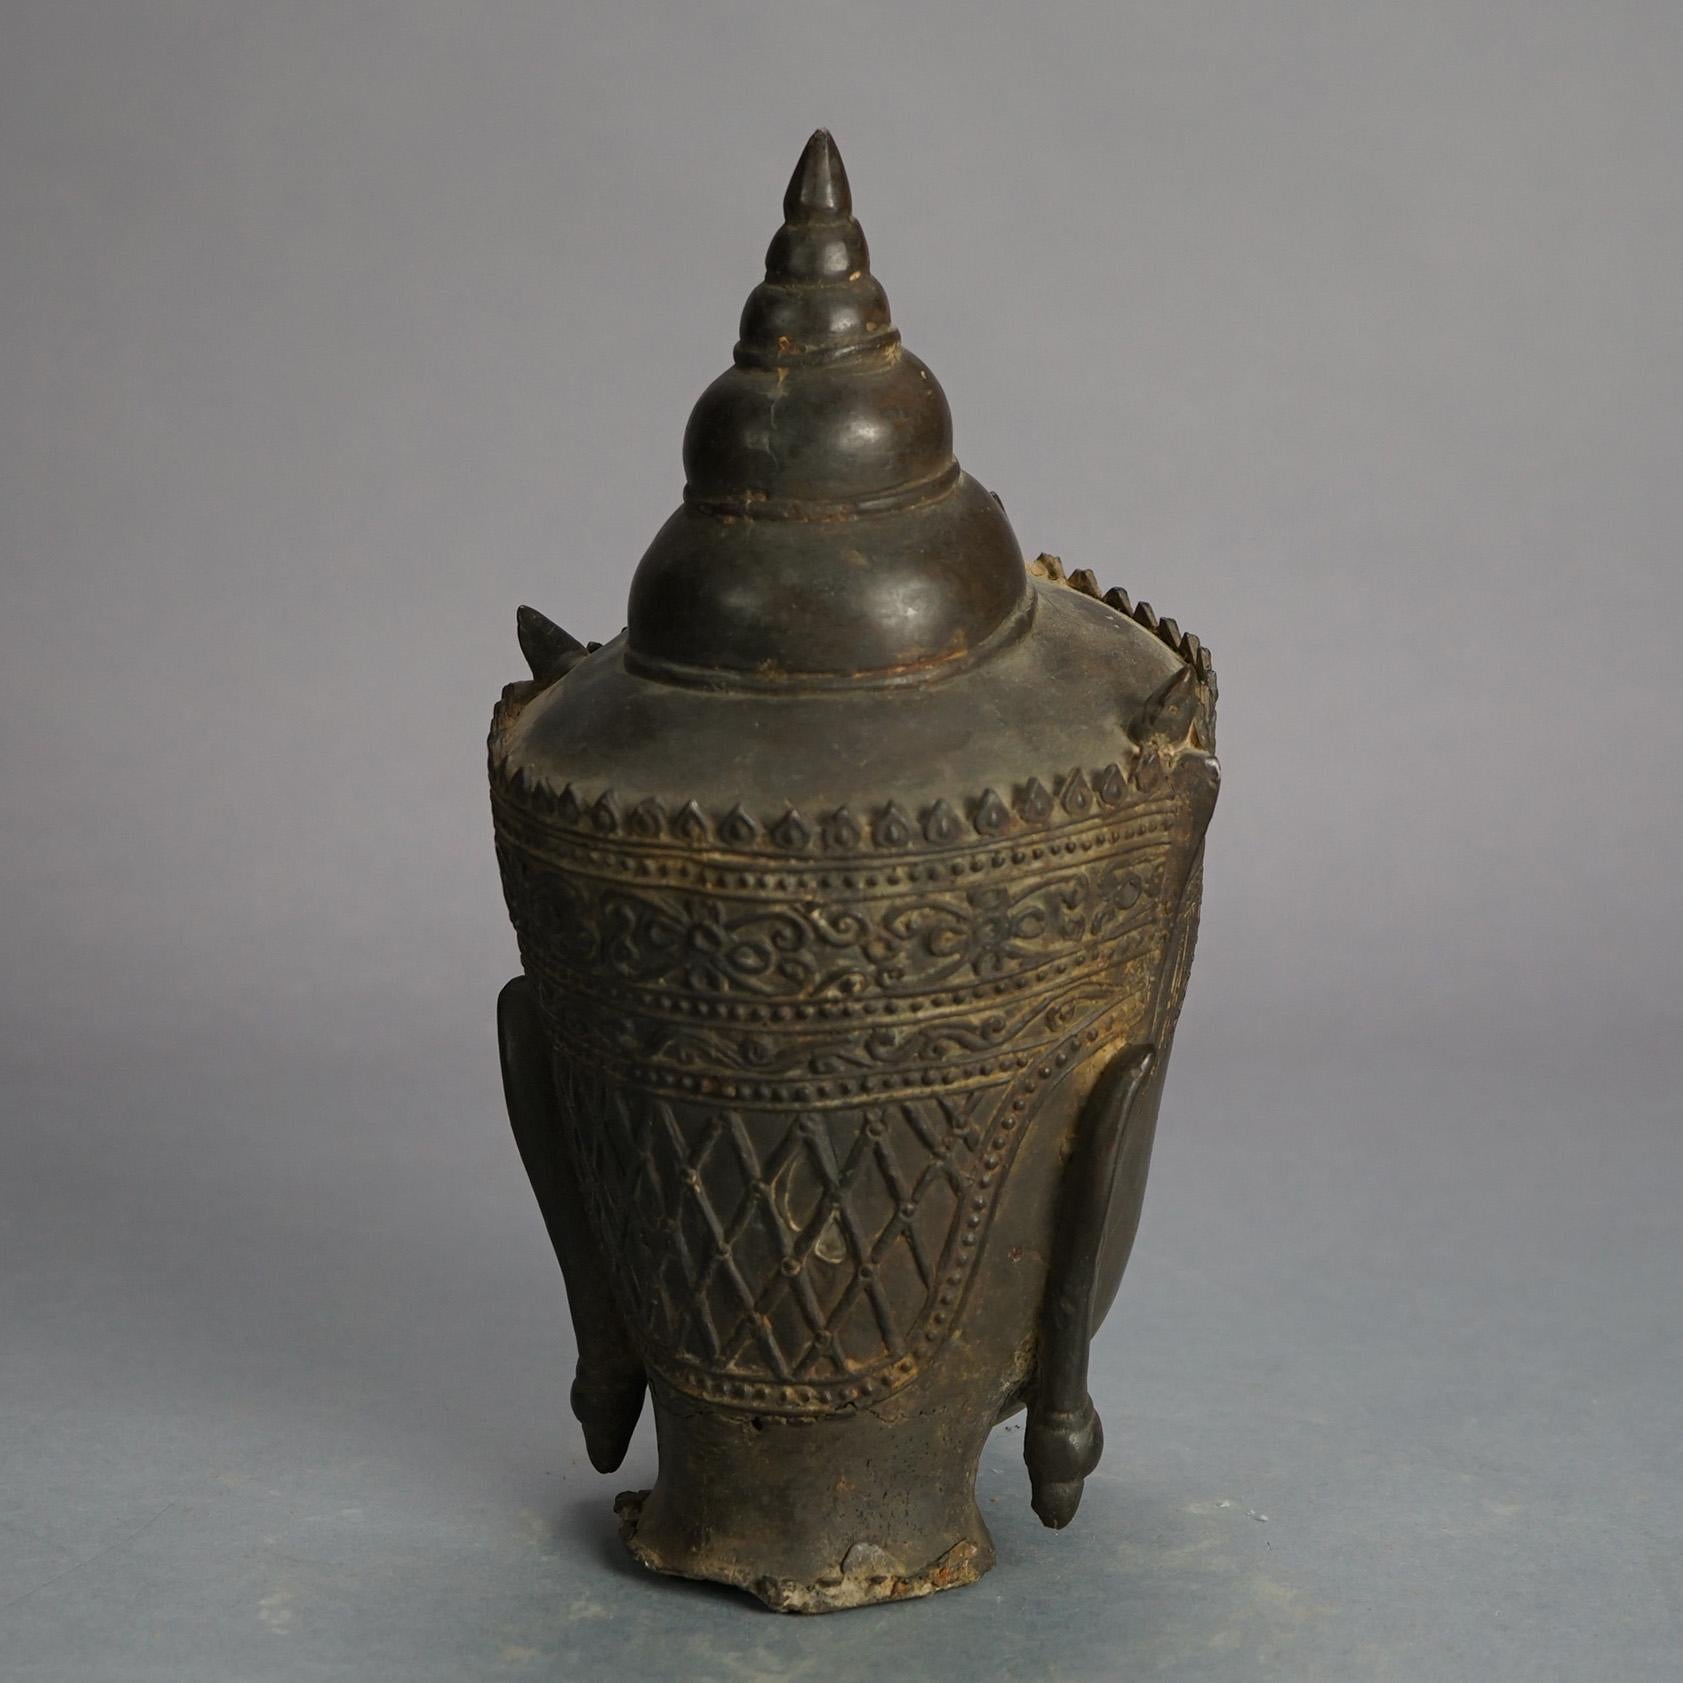 Antique Cast Bronze Crowned Tibetan Buddha Head 18thC

Measures - 10.75